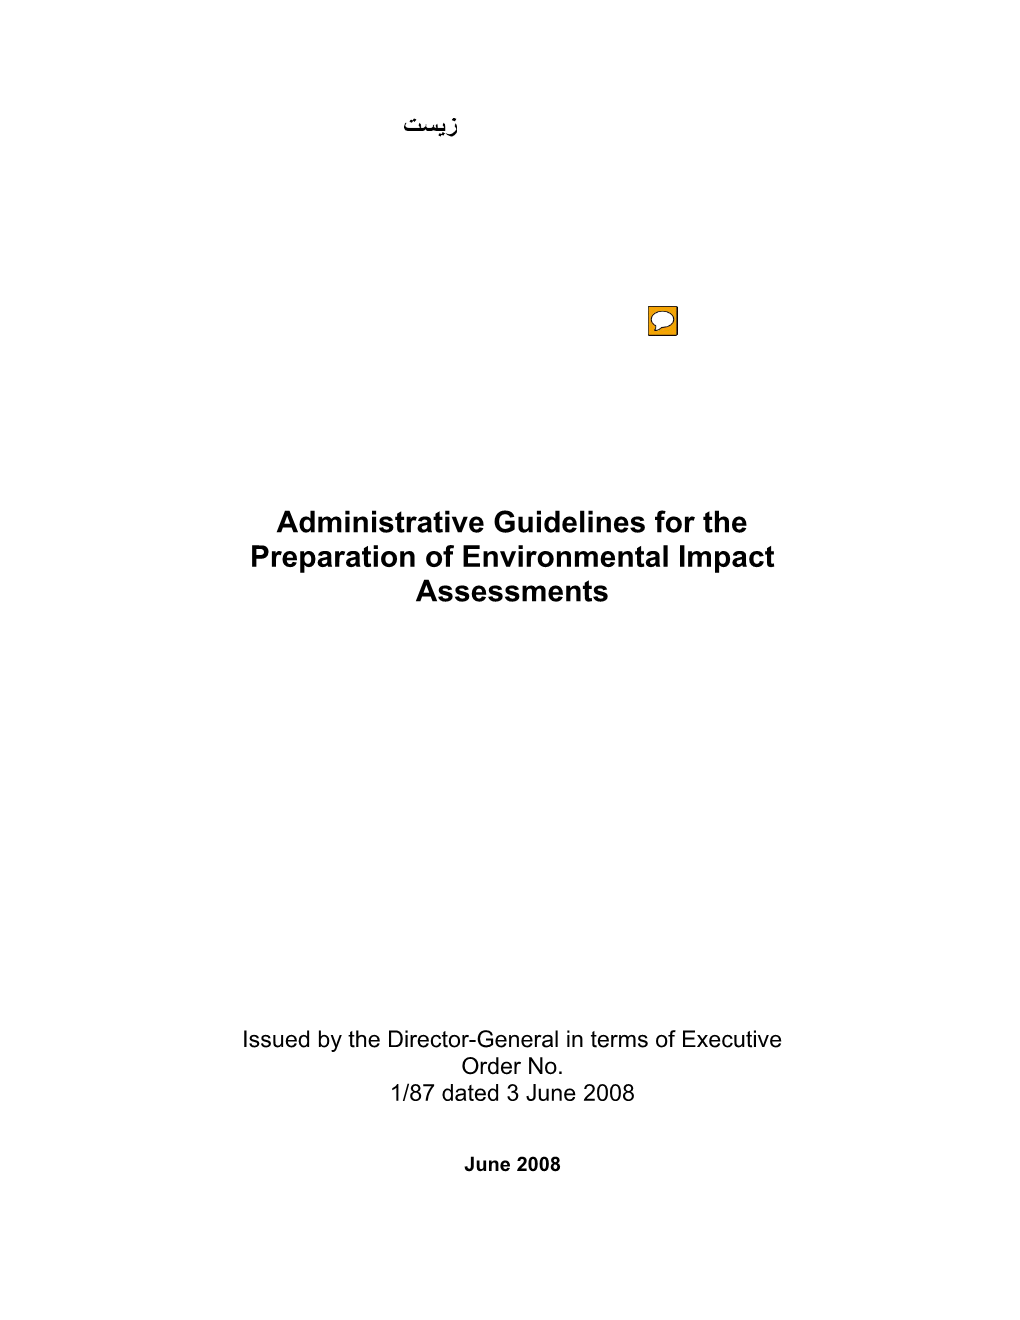 Administrative Guidelines for the Preparationof Environmental Impactassessments